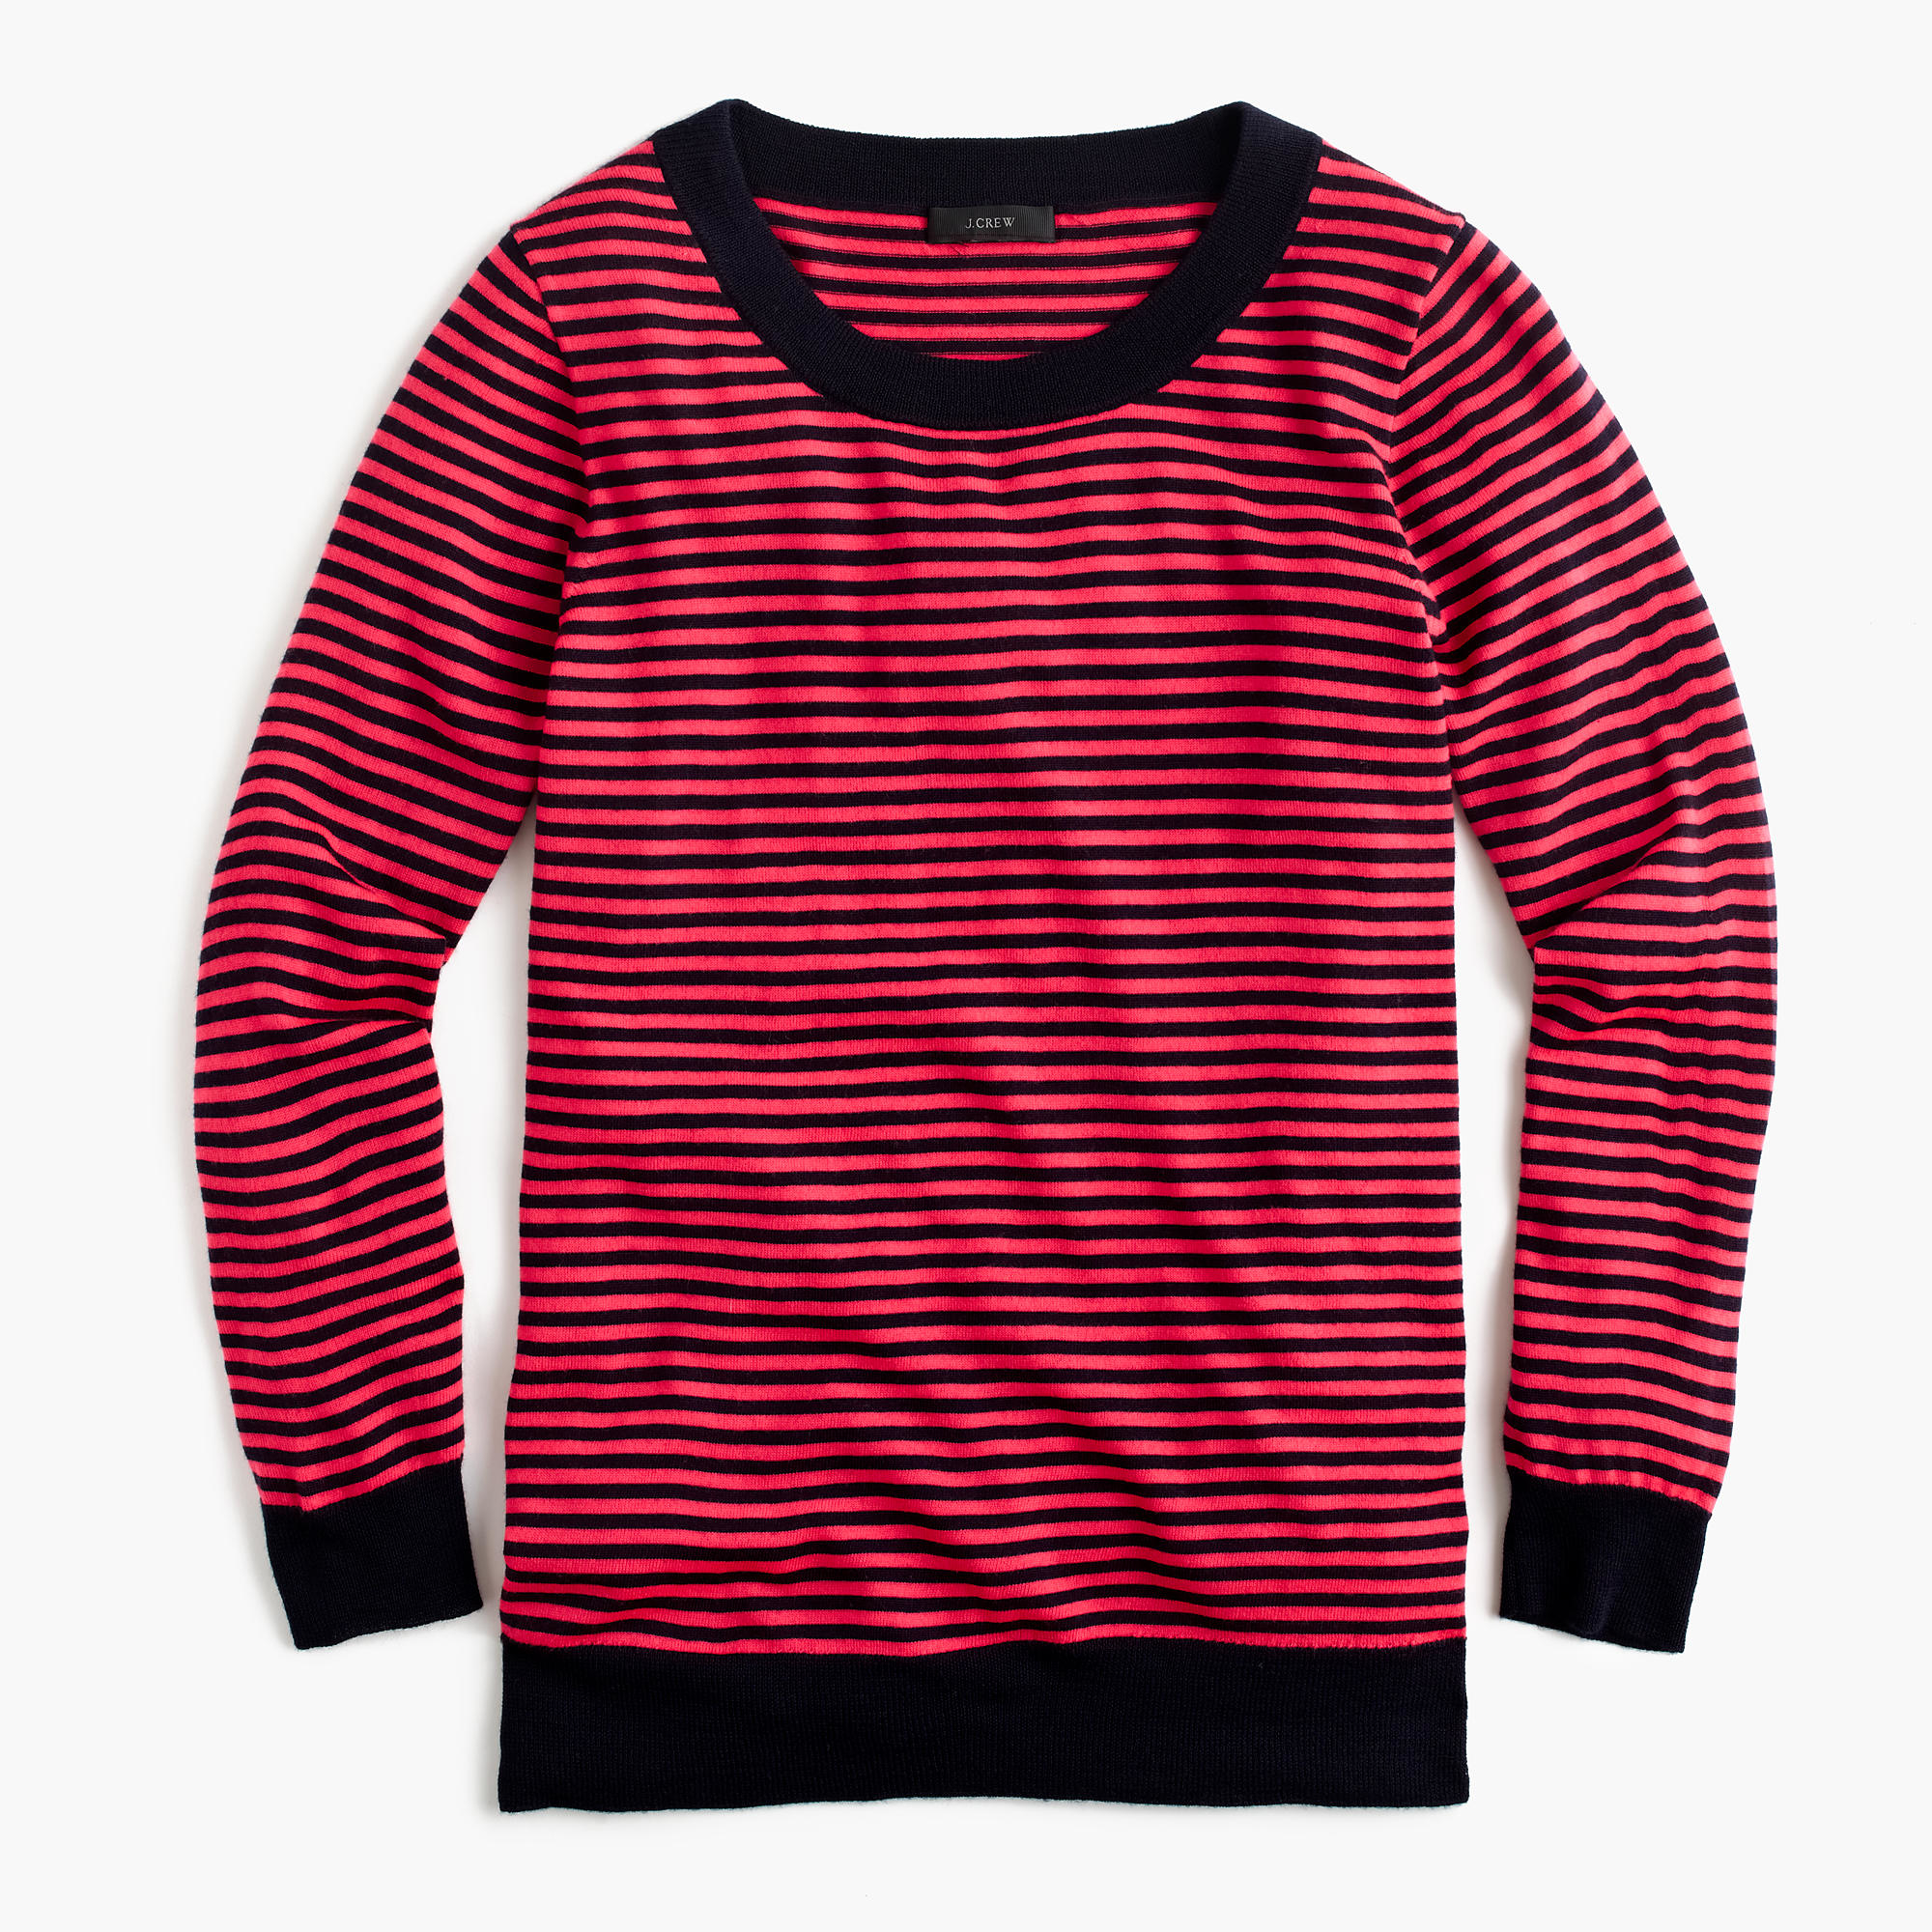 J.crew Tippi Sweater In Stripe in Red (navy watermelon) - Save 59% | Lyst